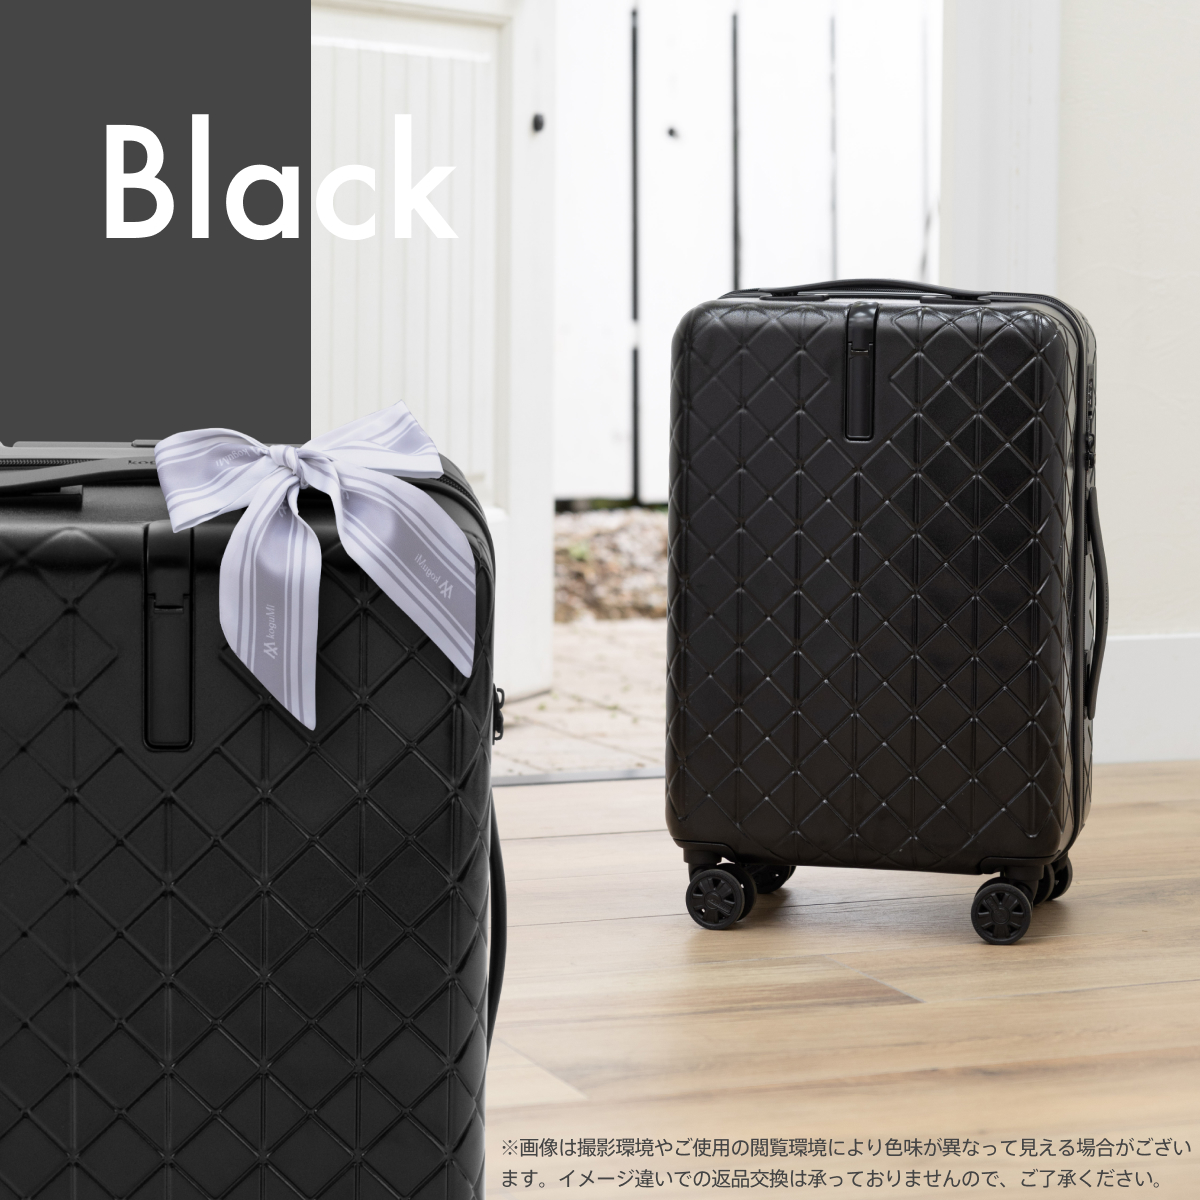 koguMi スーツケース 大容量41L 超軽量2.6kg 日本企業 キャリーケース 